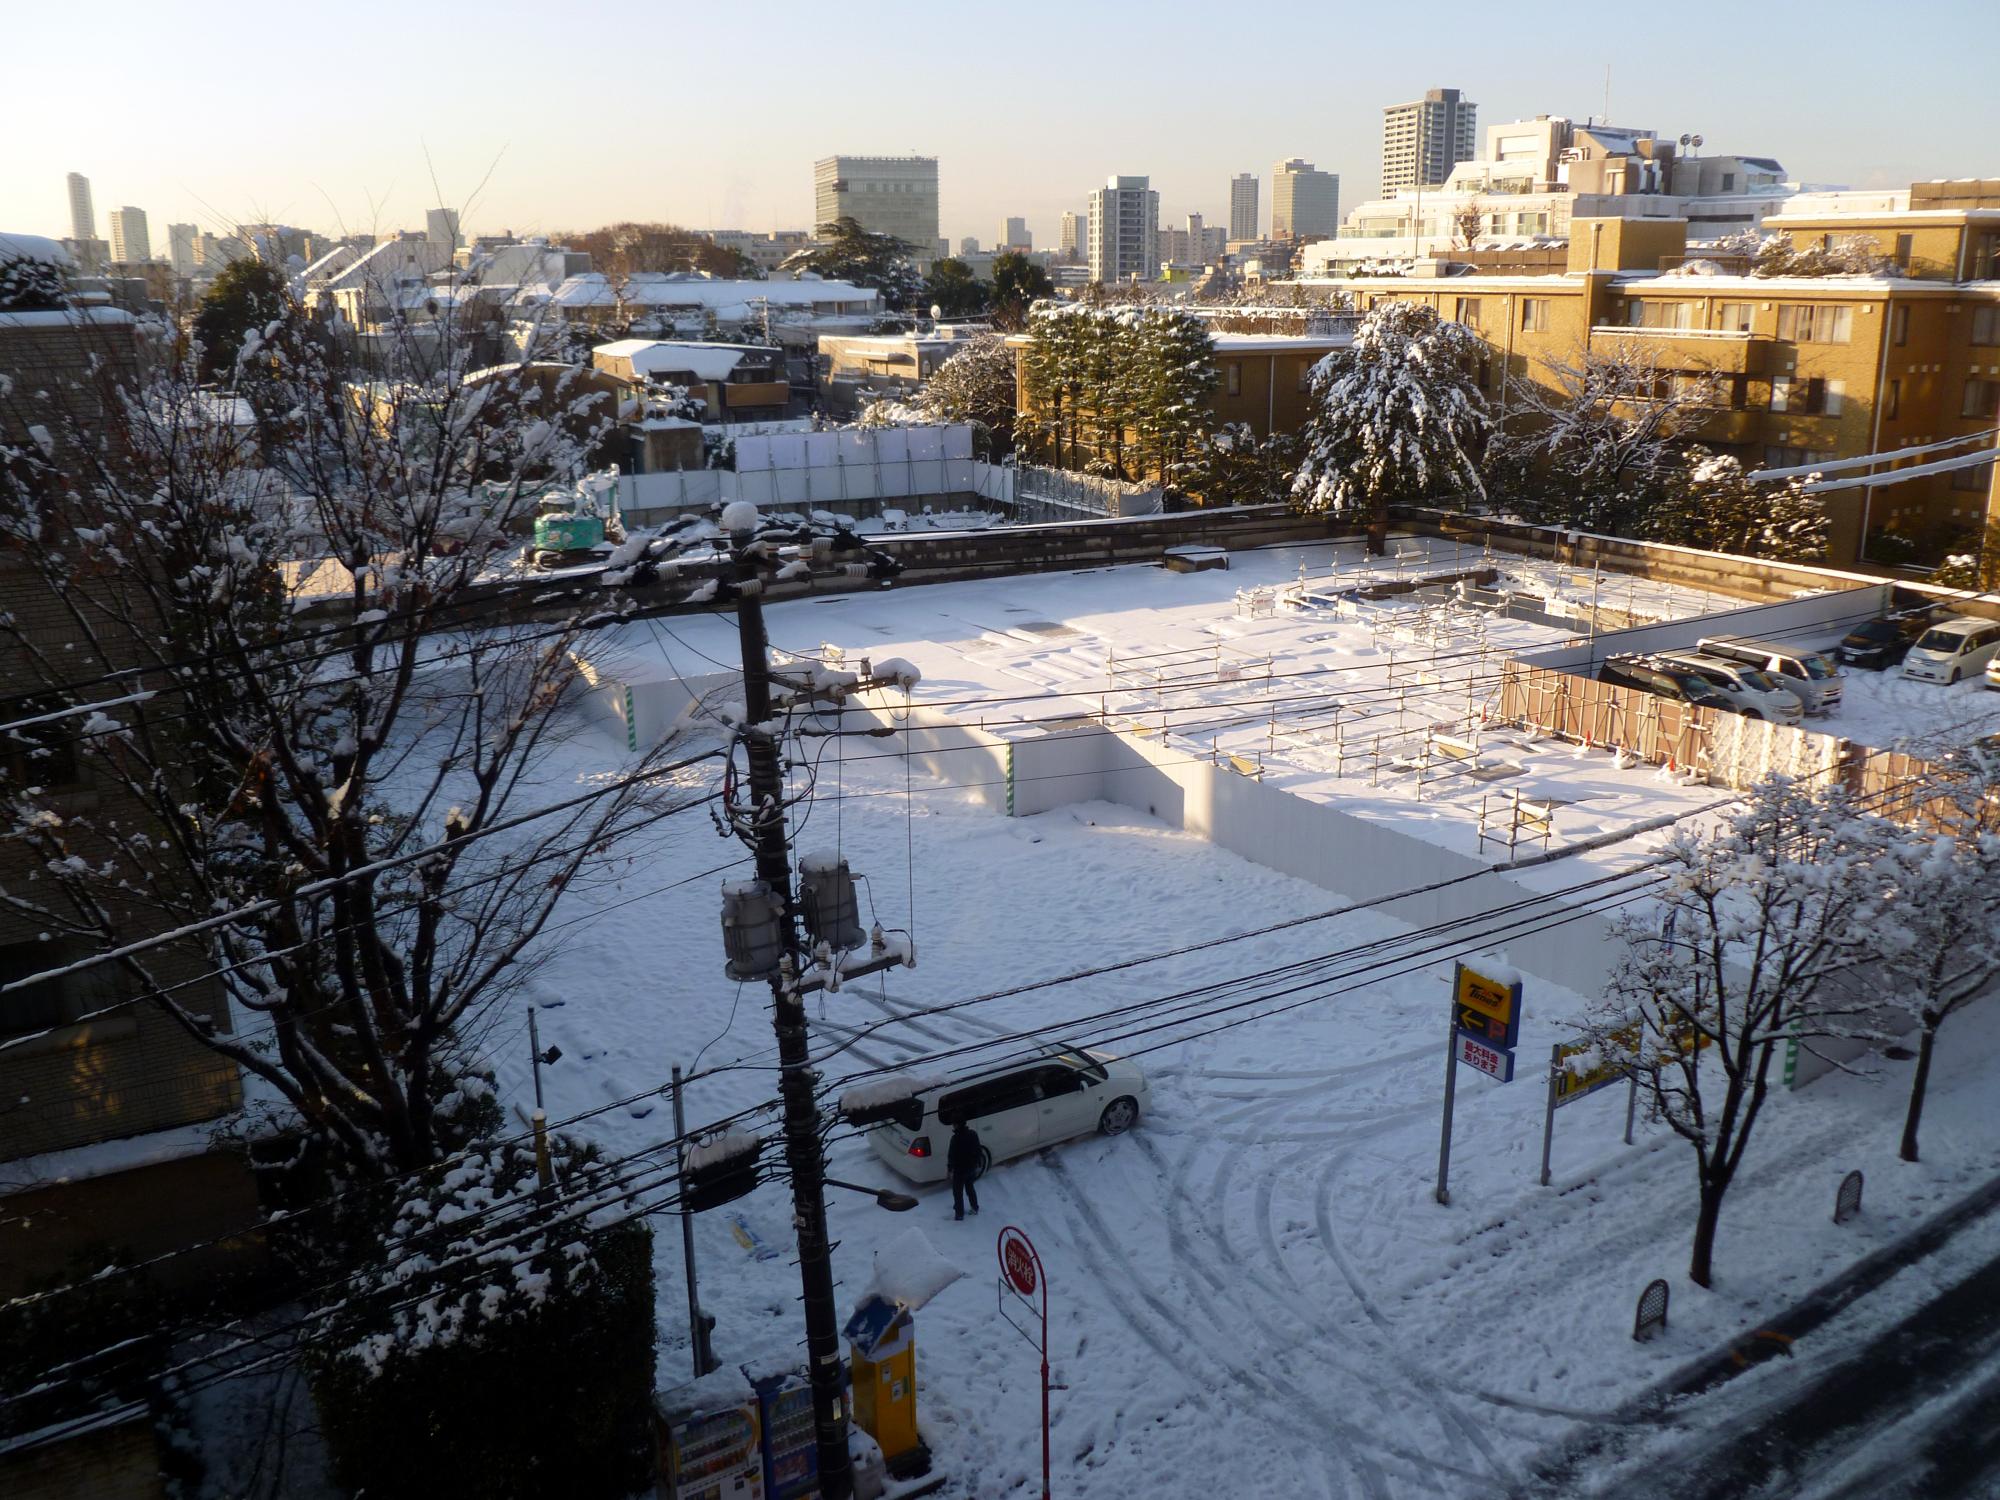 Tokyo (2018) - Snowy Parking Lot #3